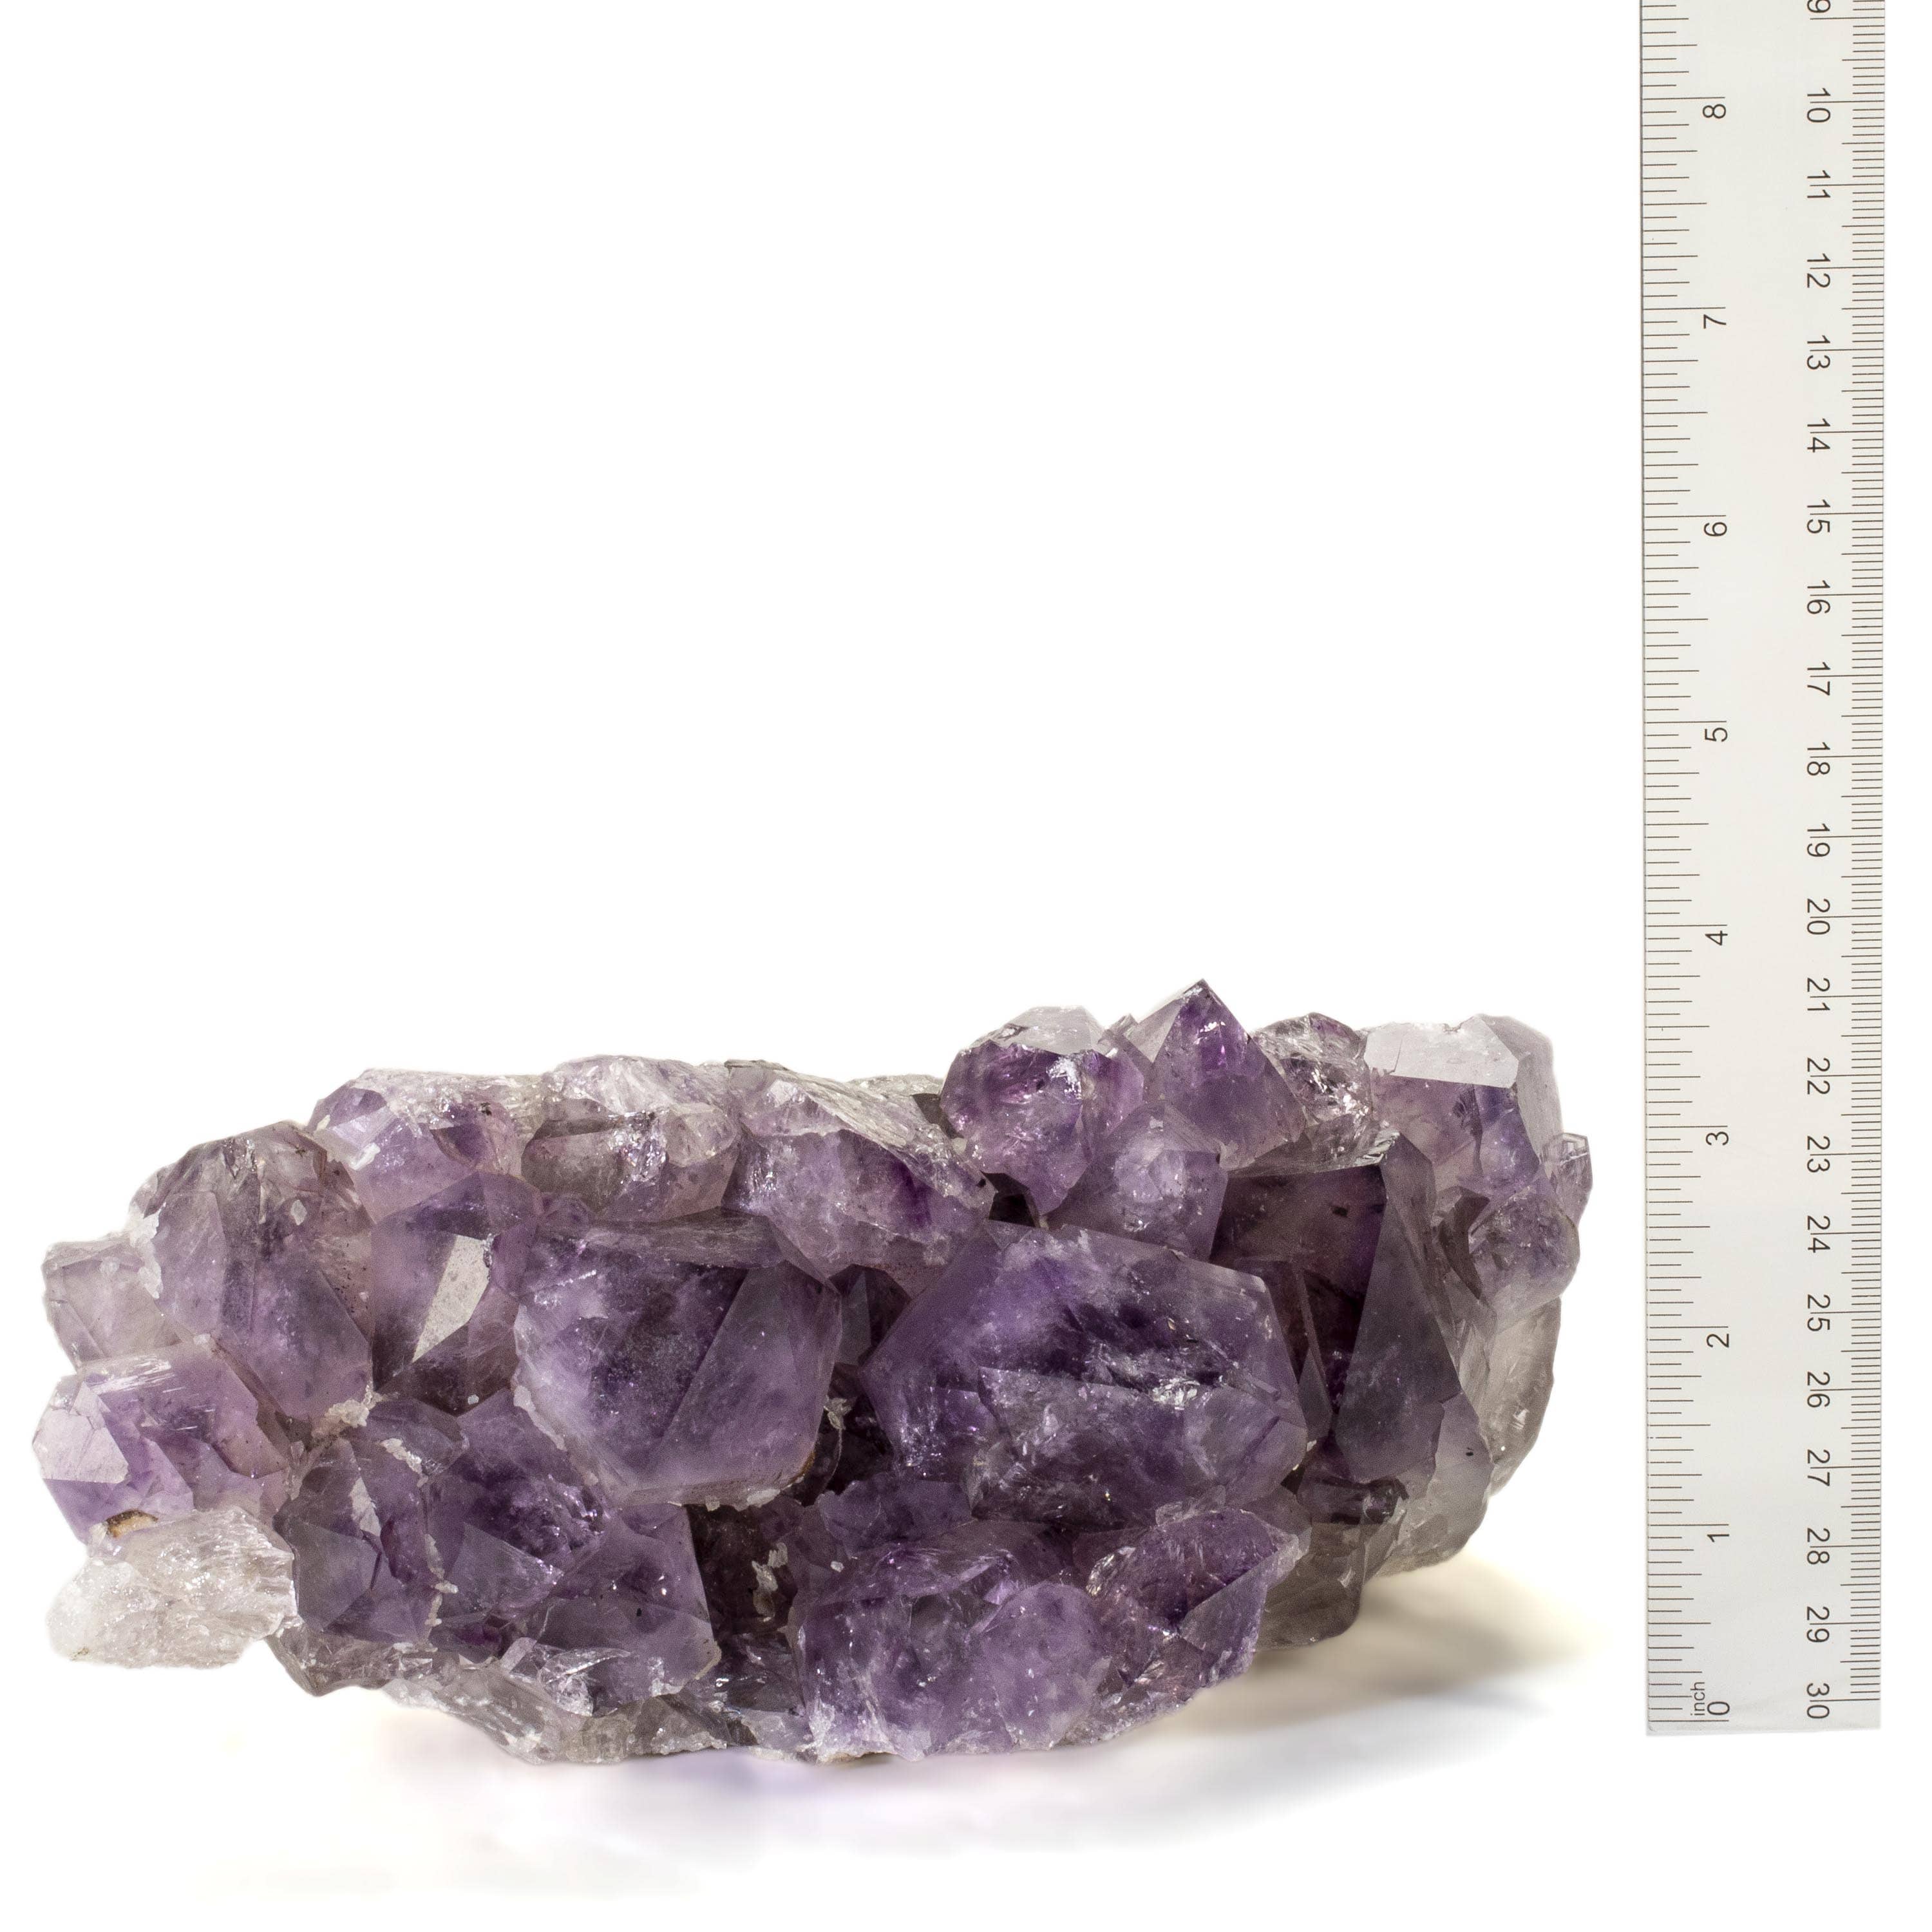 Kalifano Amethyst Amethyst Geode - 5 in. / 6.4 lbs BAG1600.014